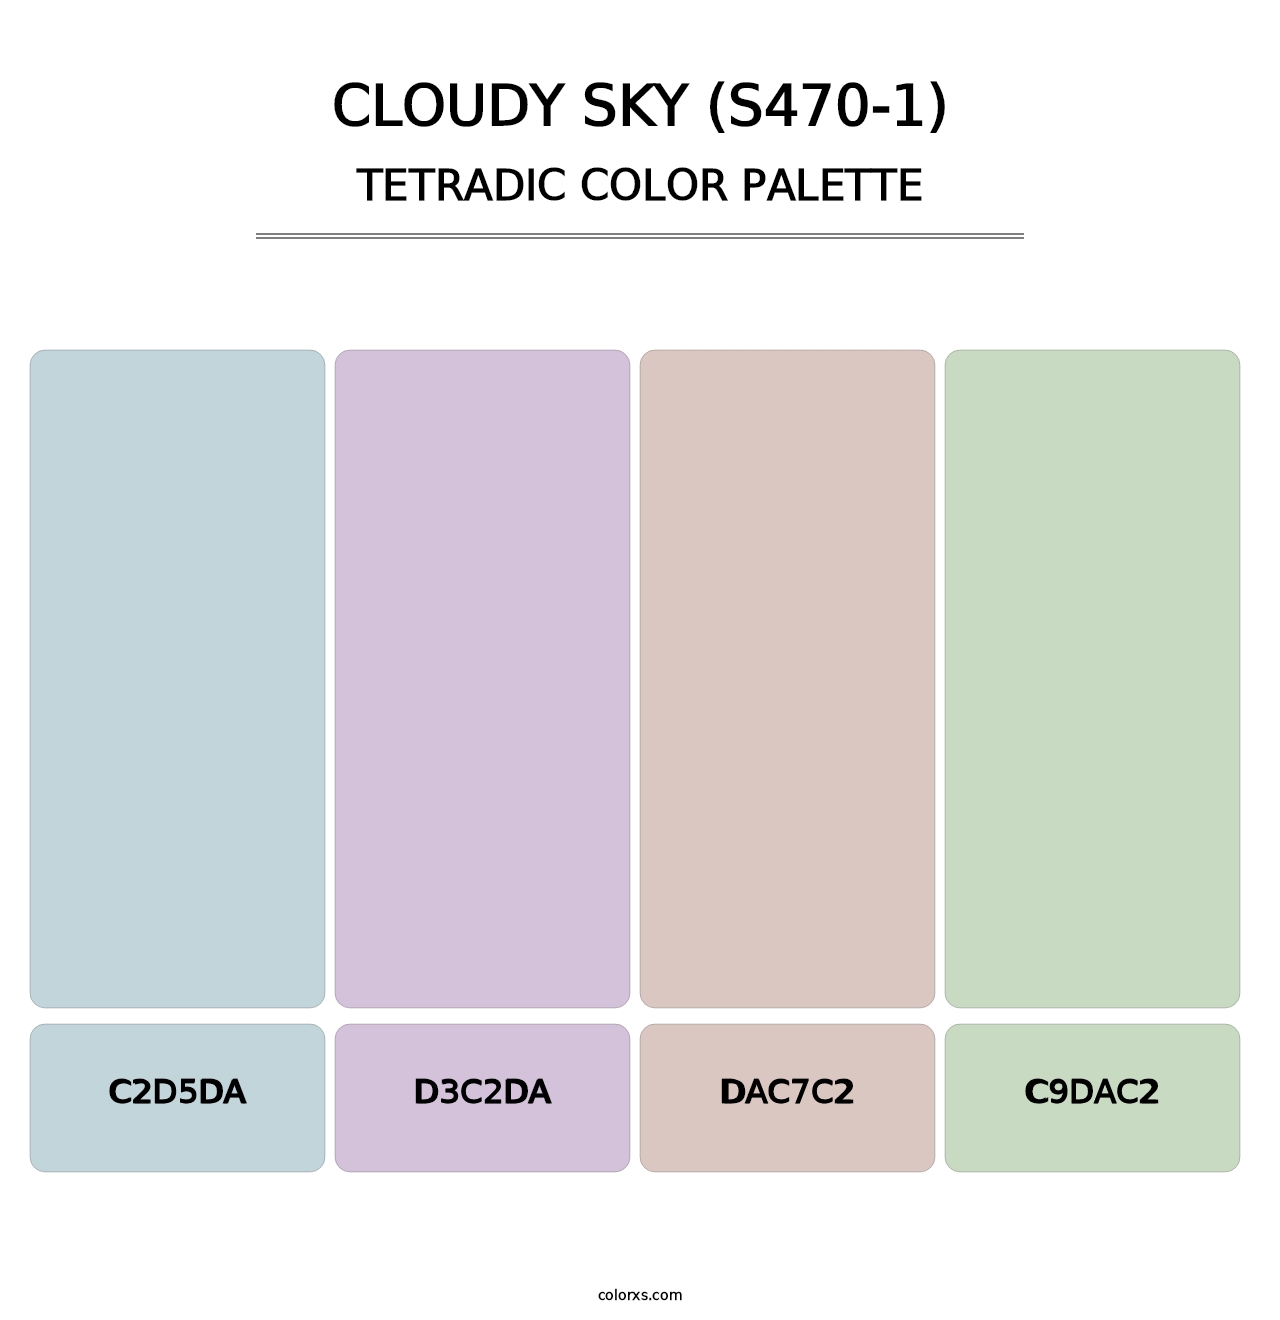 Cloudy Sky (S470-1) - Tetradic Color Palette